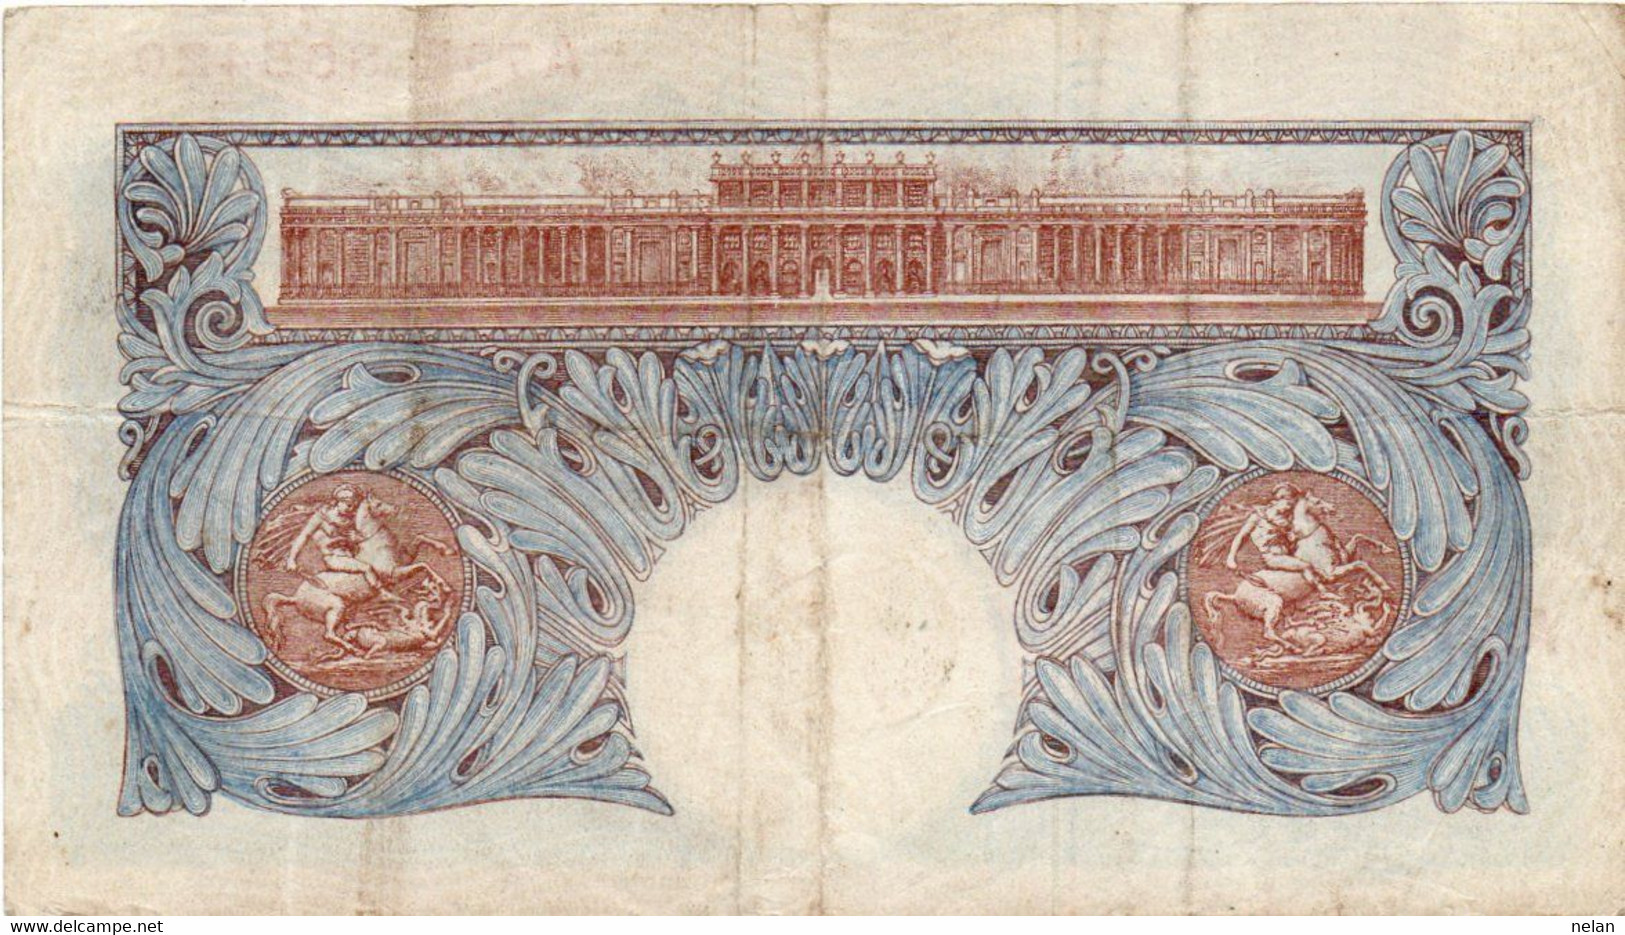 Bank Of England 1 Pound 1940 P-367a  K. O. Peppiatt - 1 Pound